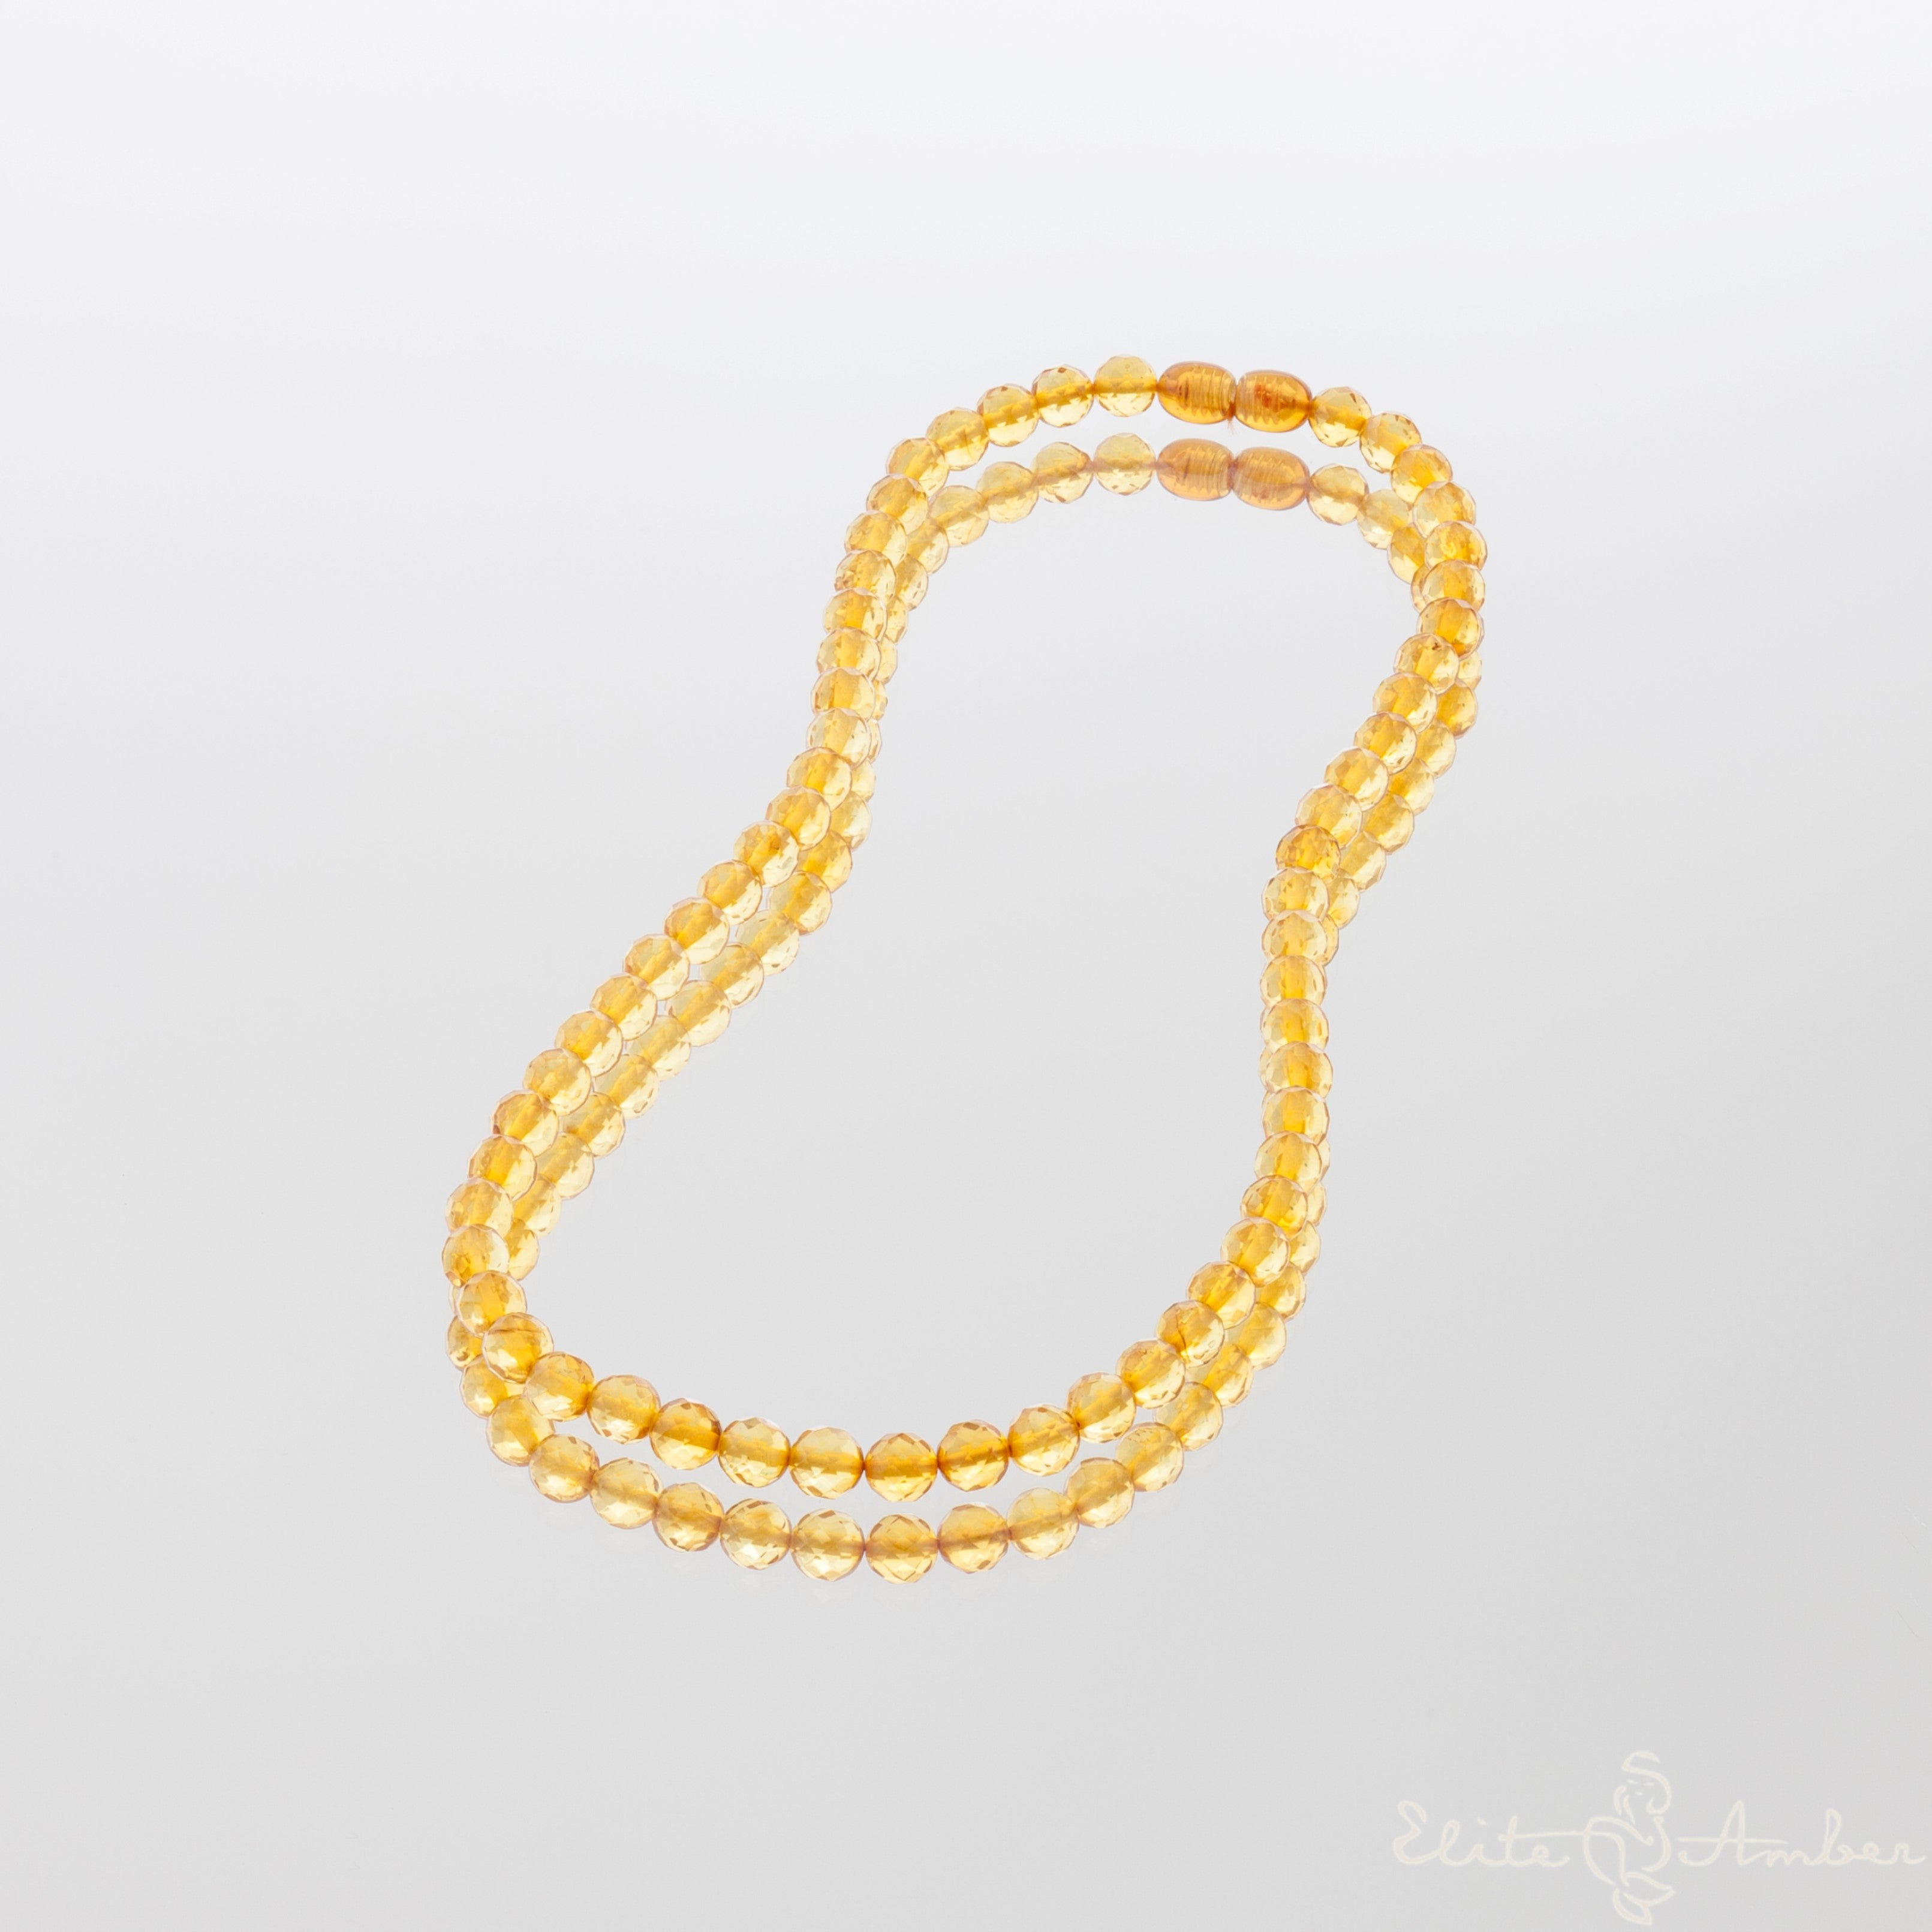 Amber necklace "Glossy honey"